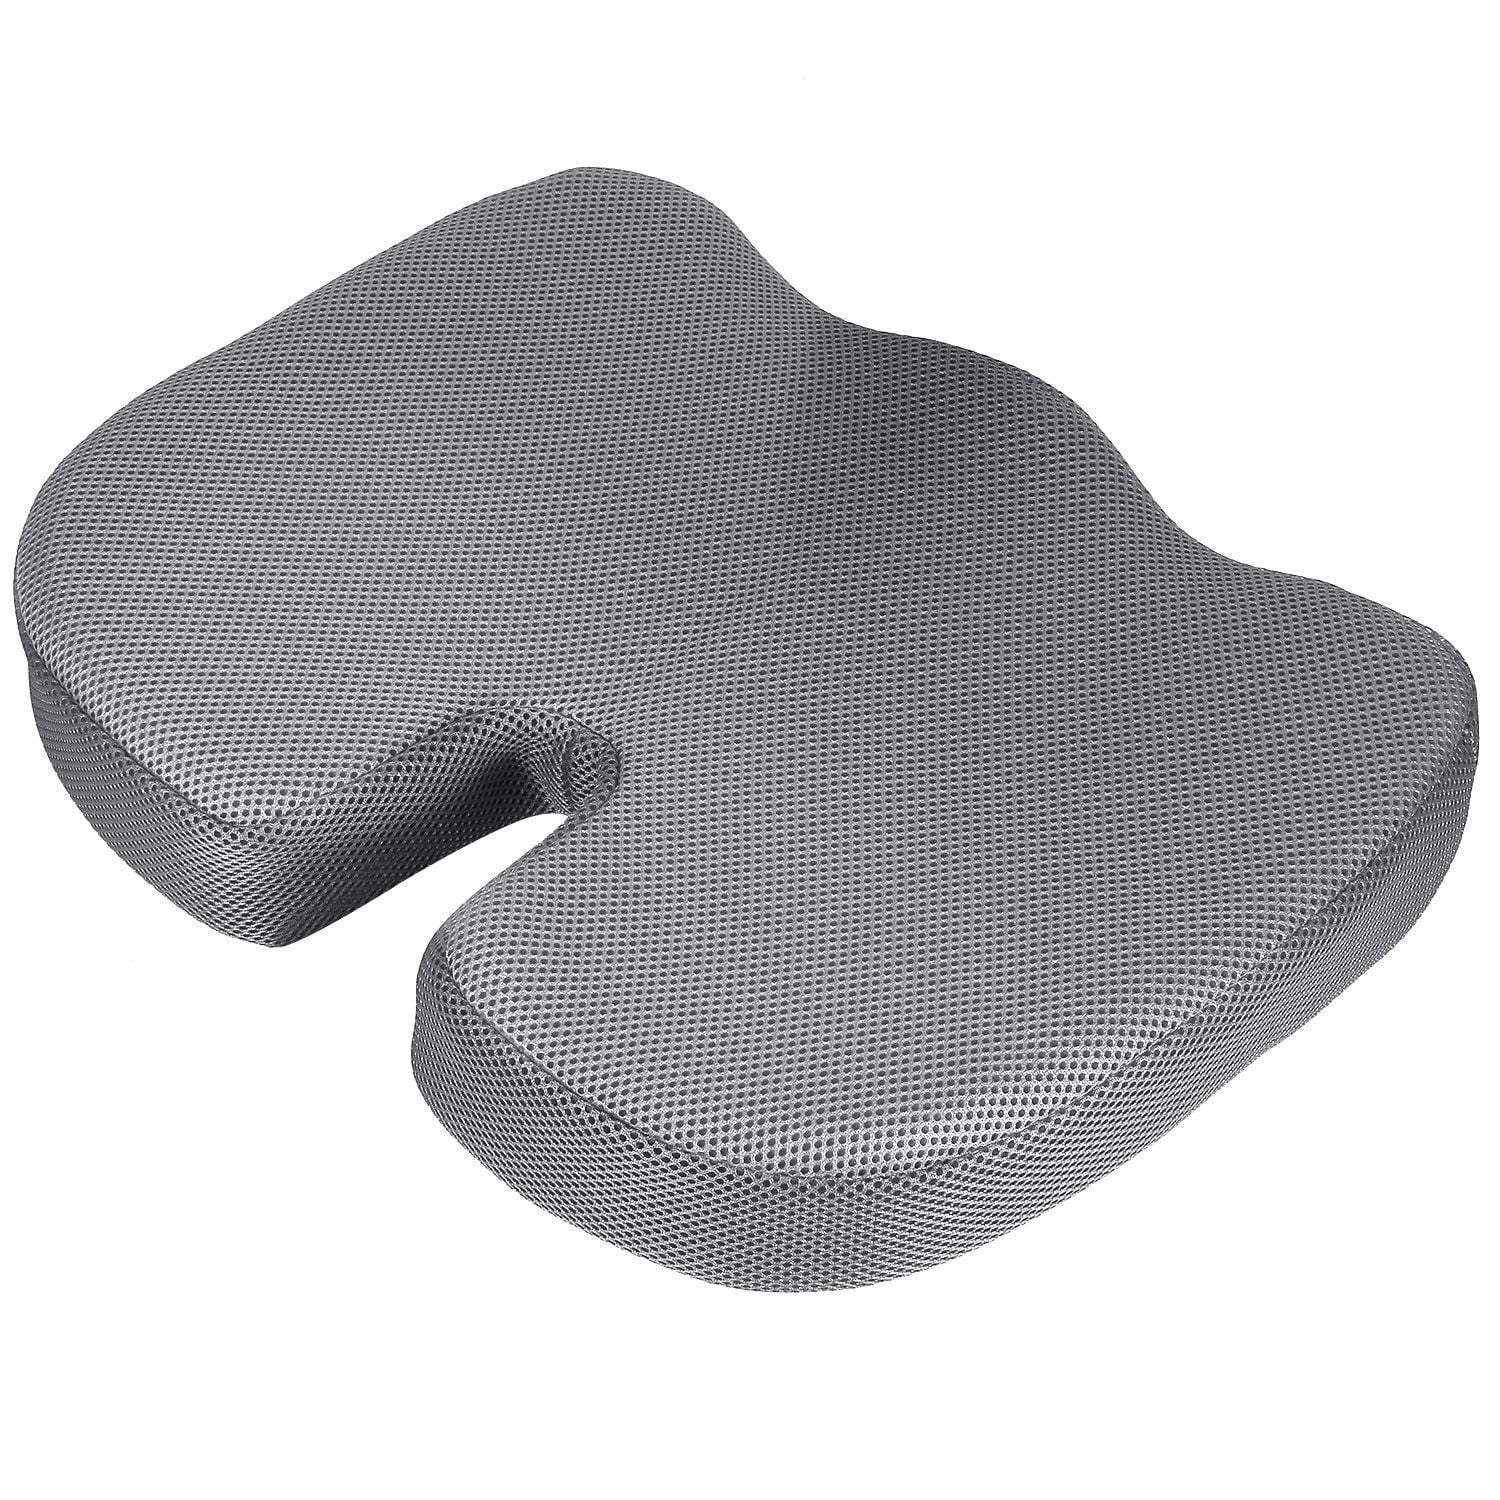  Dreamer Car Comfort Enhanced Seat Cushion - Breathable Mesh &  Memory Foam Seat Cushion for Tailbone Pain Relief - Non-Slip Bottom,Car,  Wheelchair, Office Chair Cushions (Mesh Cover,Gray) : Office Products